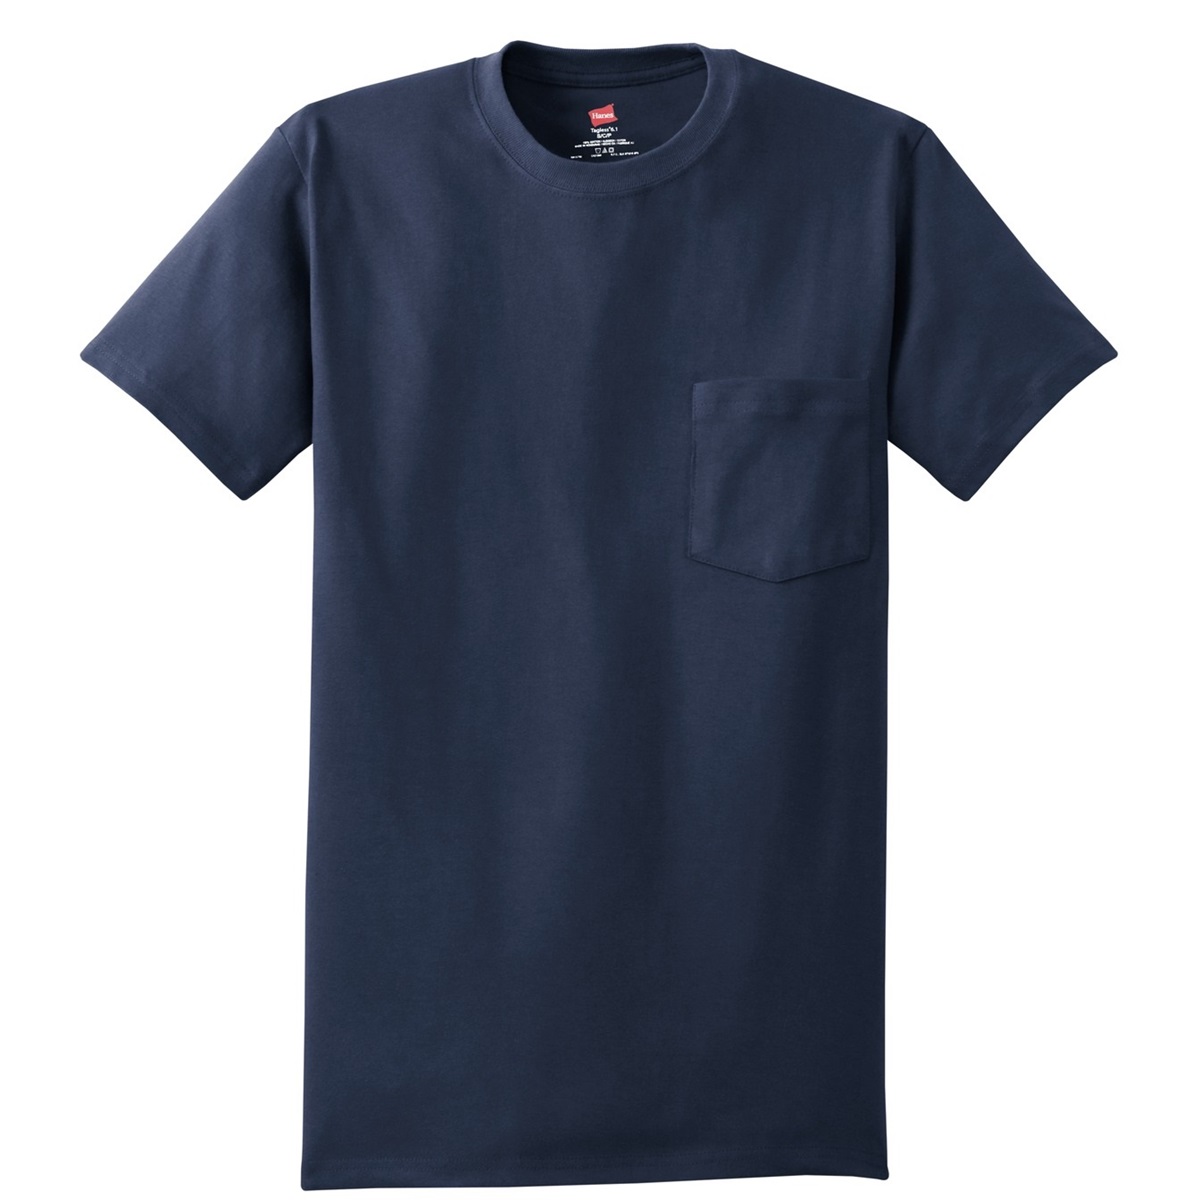 Hanes 5590 Tagless Cotton T-Shirt with Pocket - Navy | FullSource.com